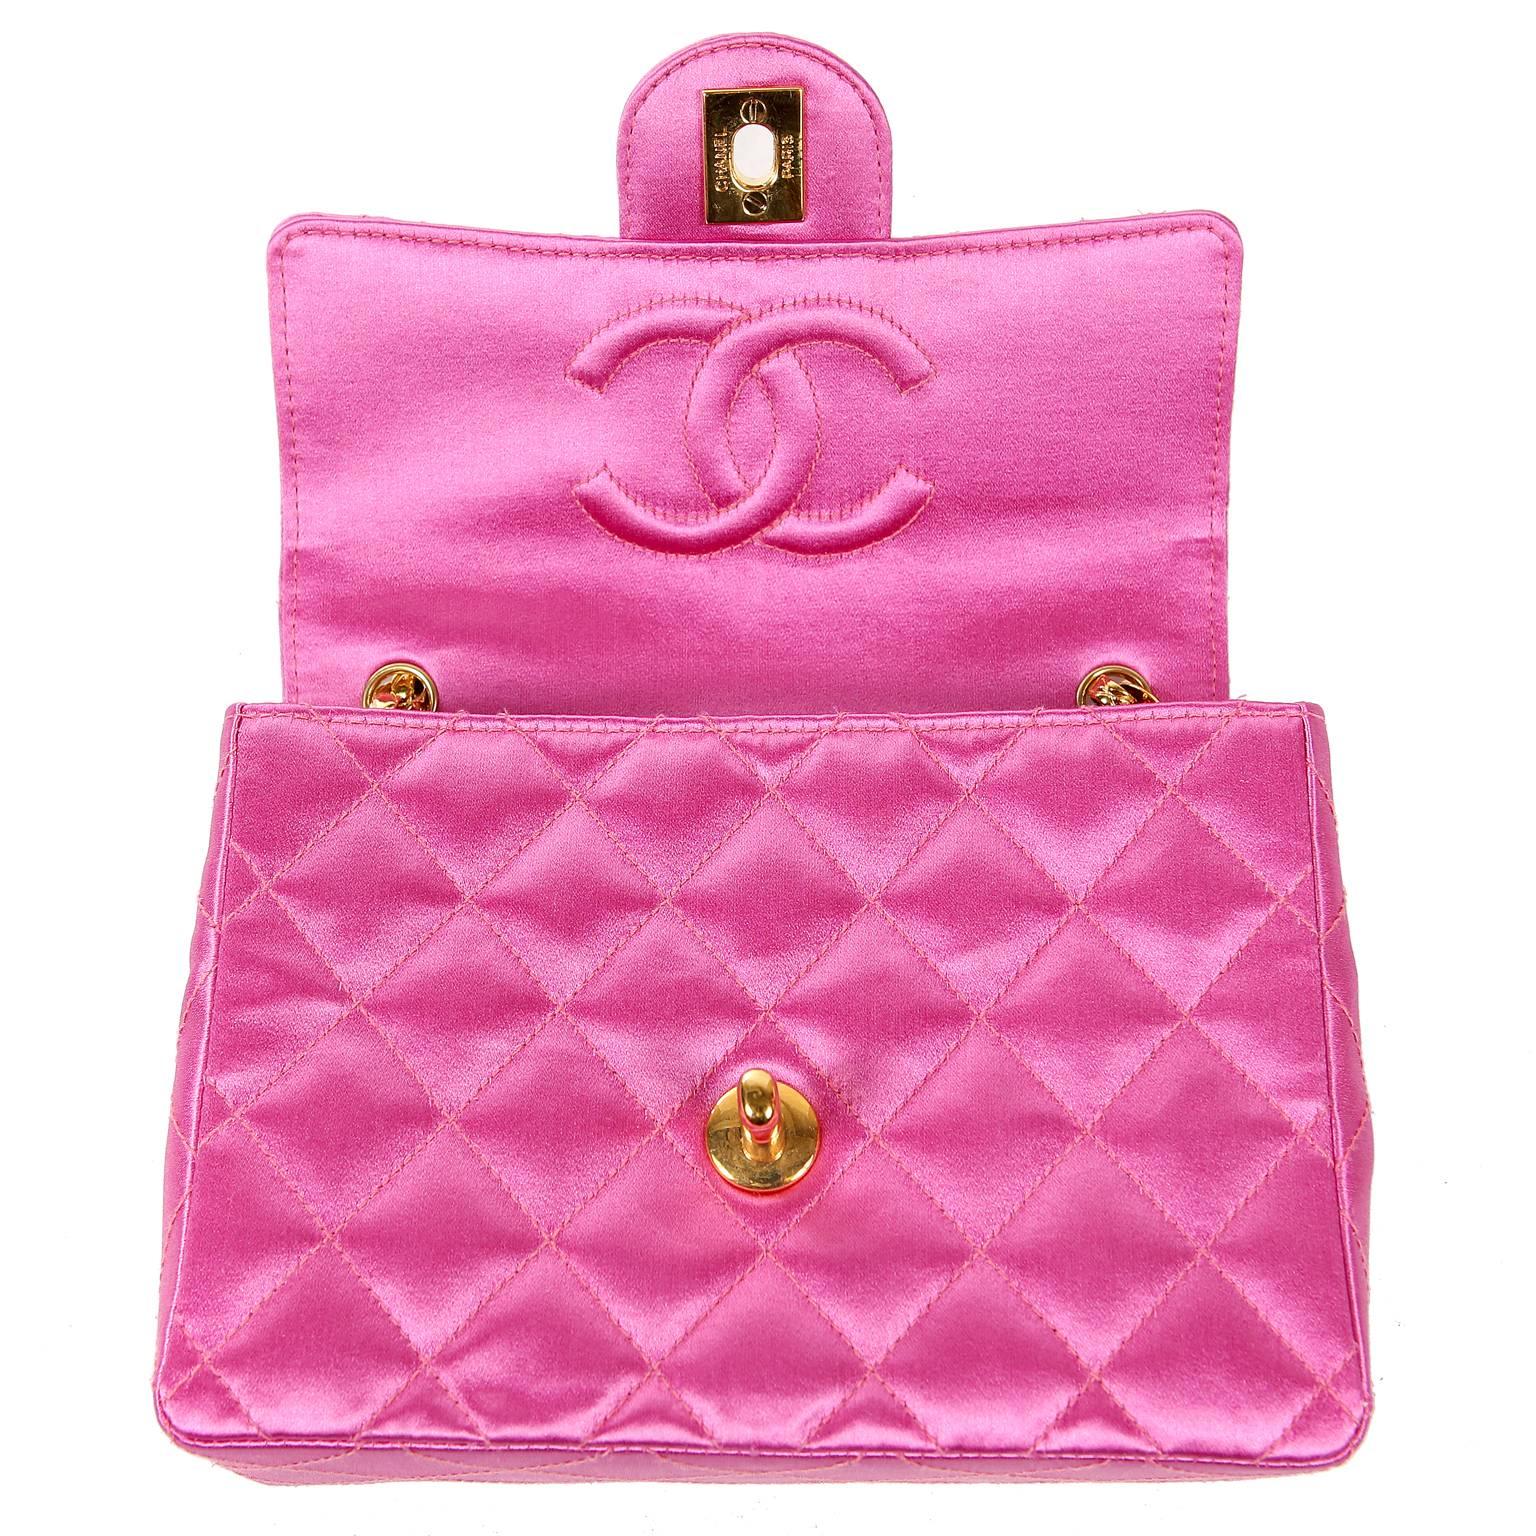 Pink Chanel Fuchsia Satin Mini Classic Flap Bag